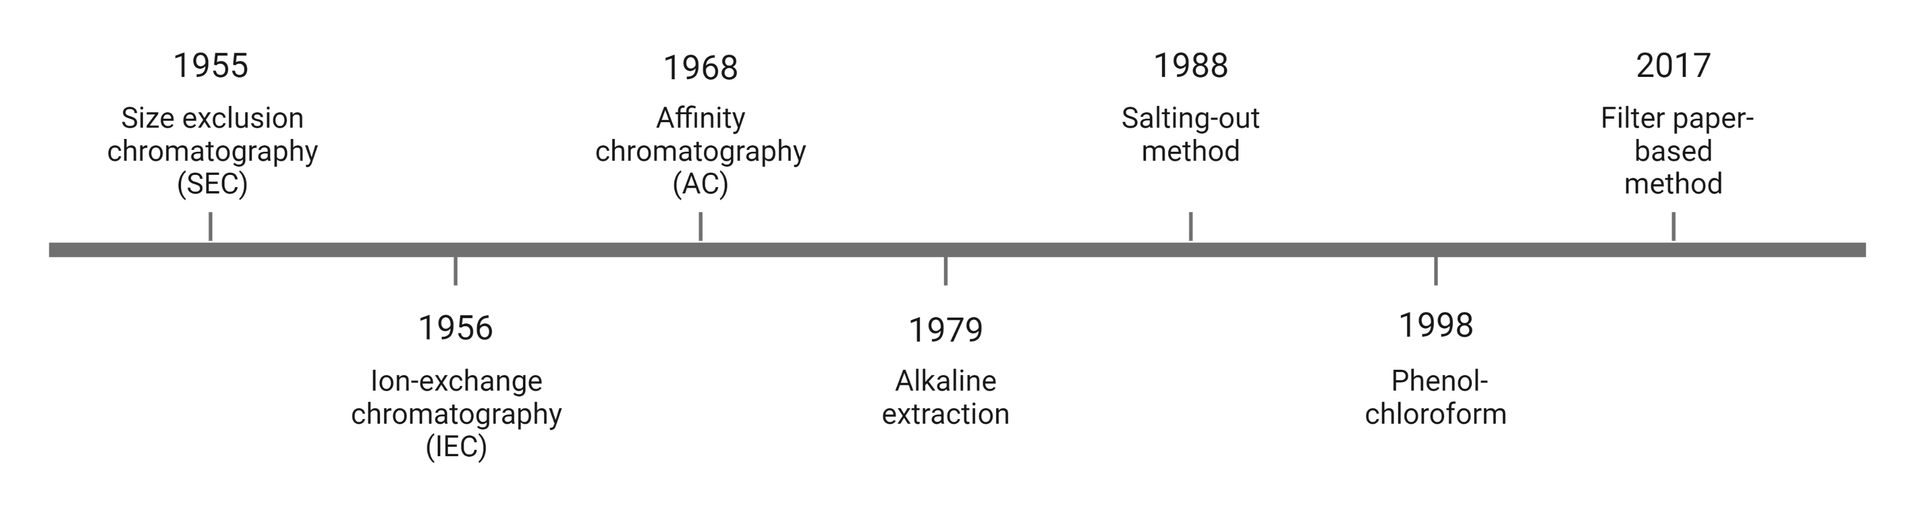 DNA extraction methods timeline